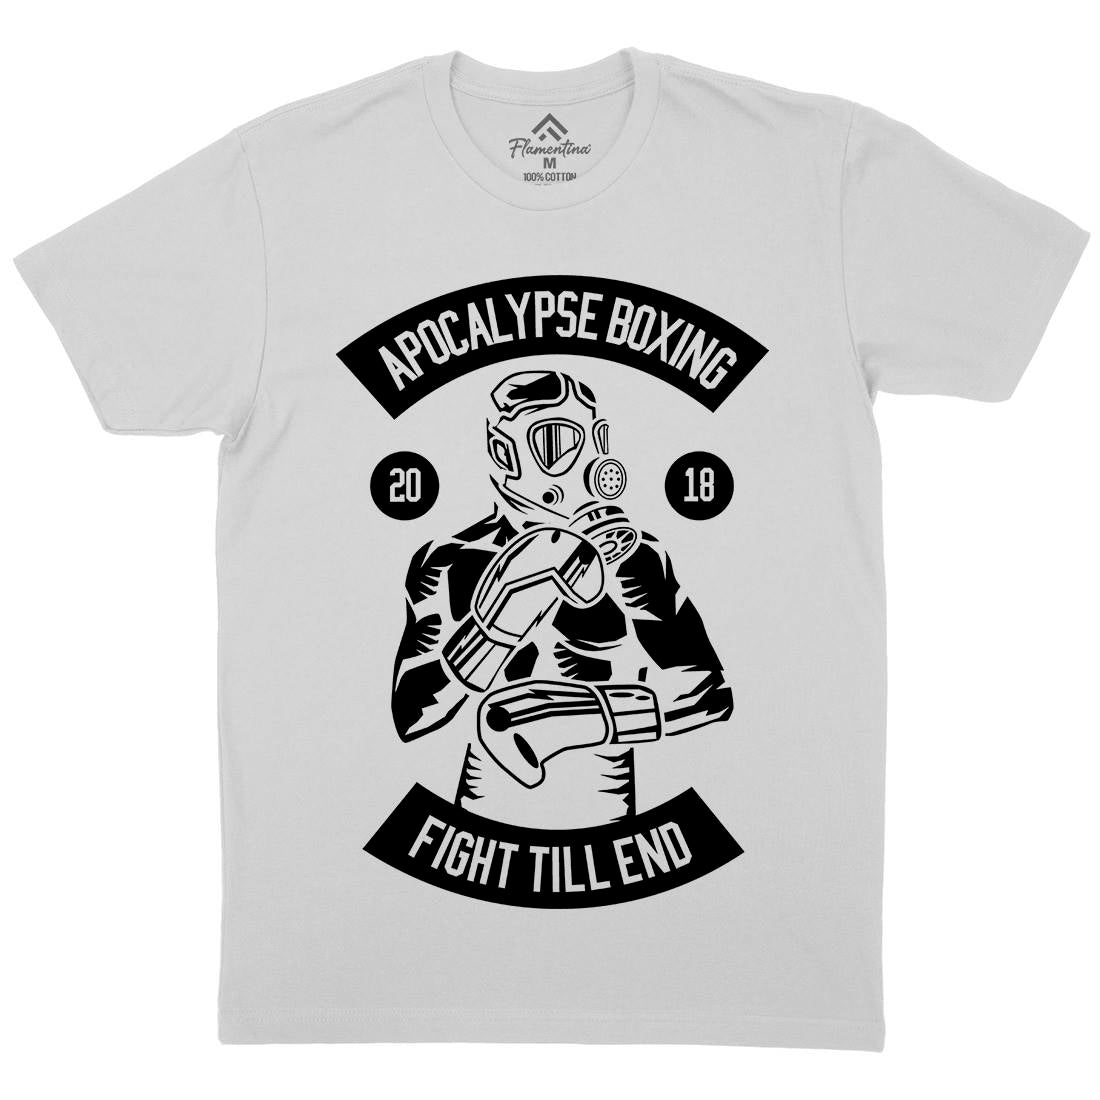 Apocalypse Boxing Mens Crew Neck T-Shirt Sport B481